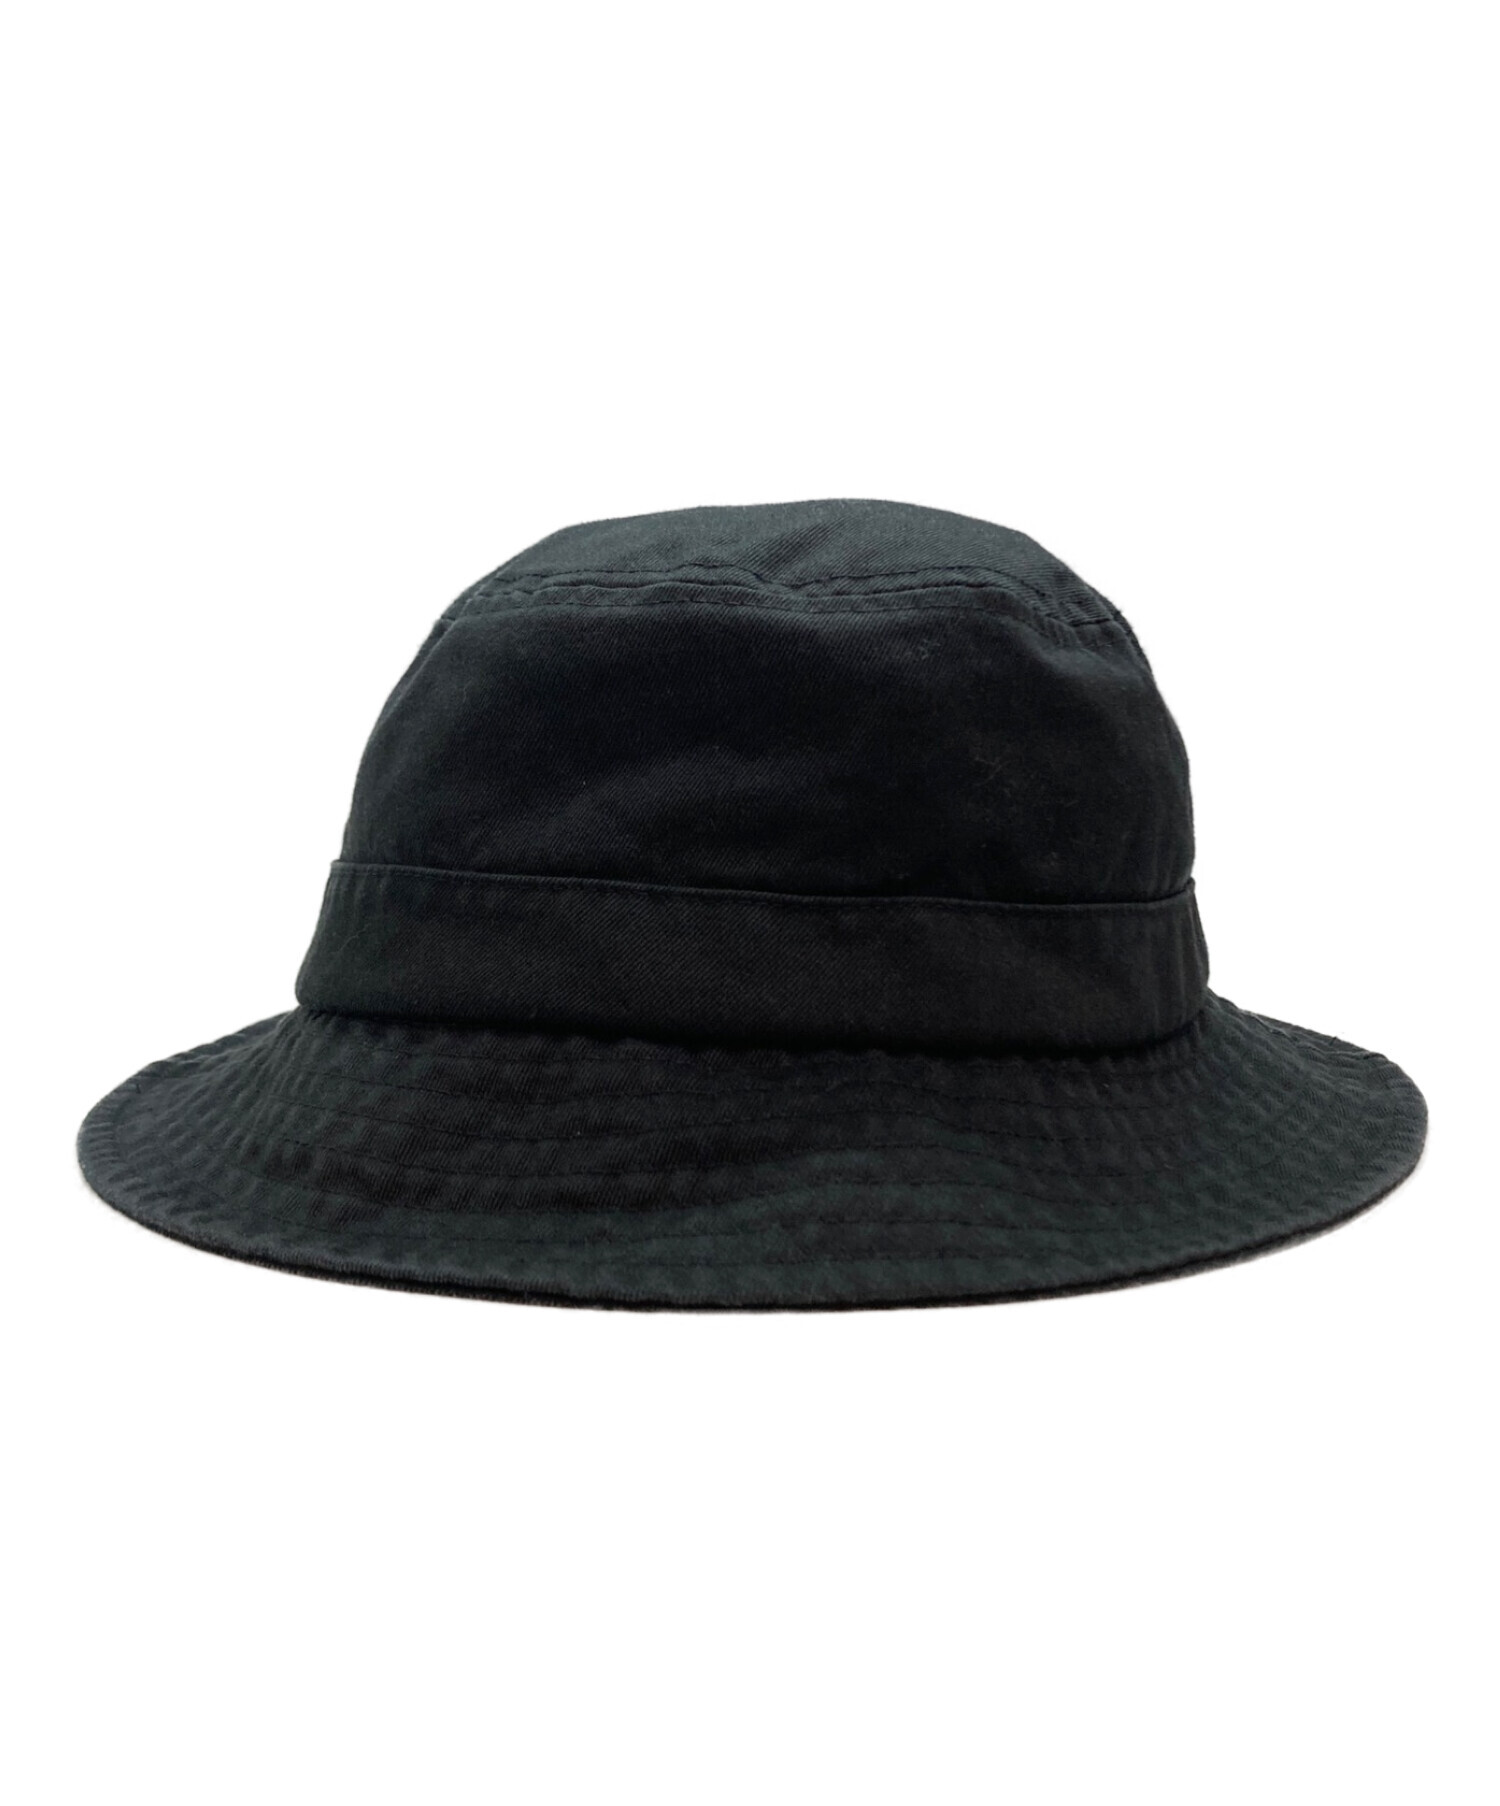 SUPREME (シュプリーム) Outline Crusher Hat ブラック